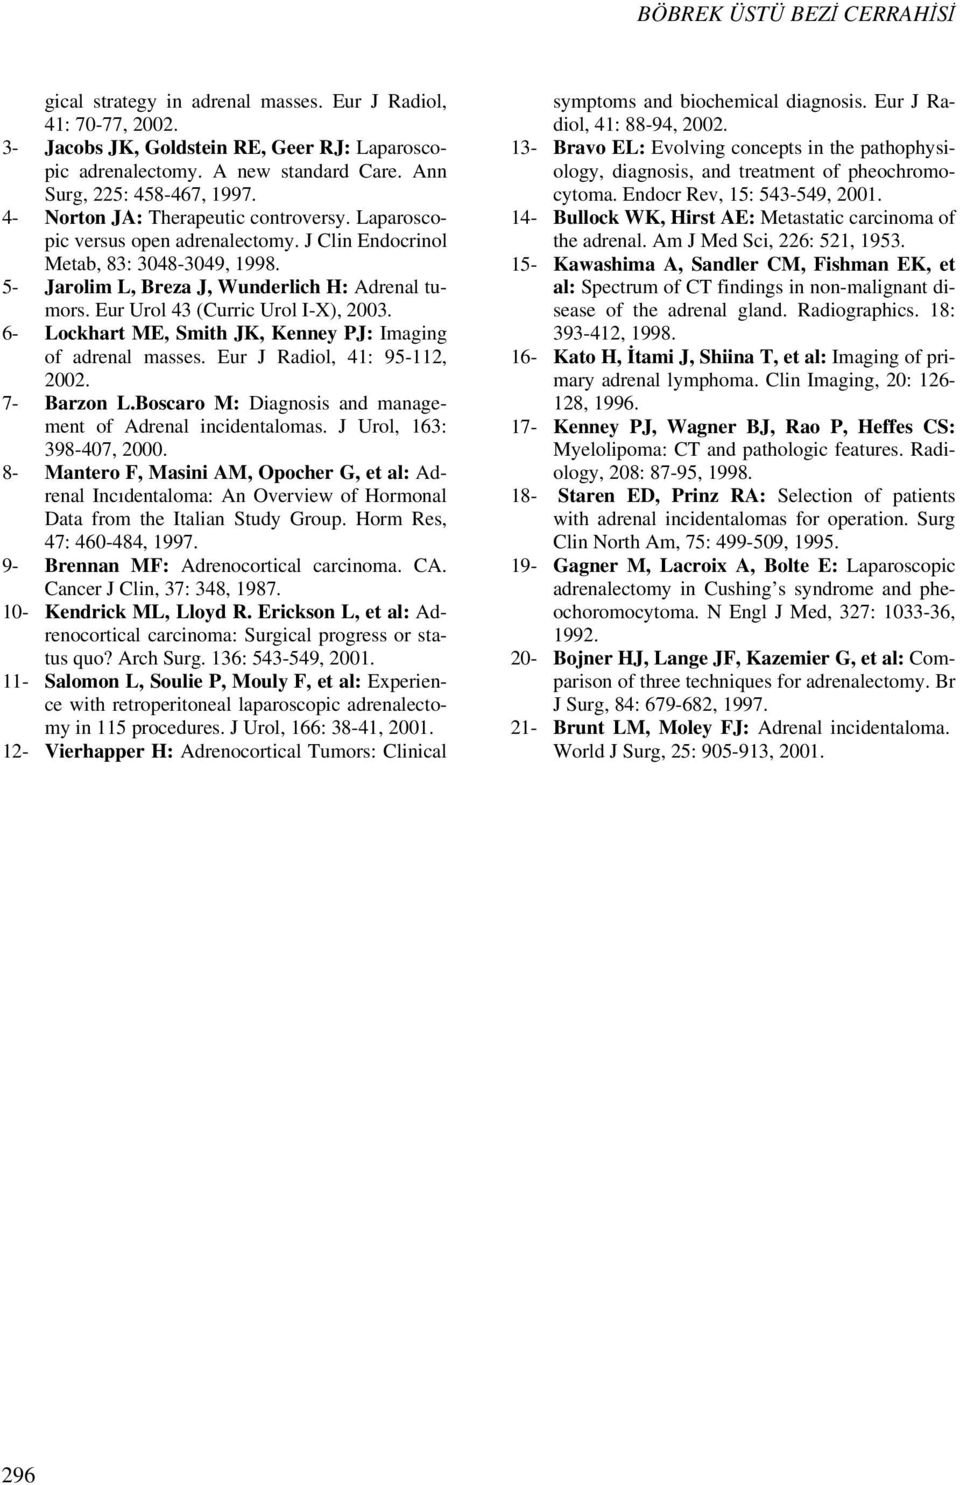 5- Jarolim L, Breza J, Wunderlich H: Adrenal tumors. Eur Urol 43 (Curric Urol I-X), 2003. 6- Lockhart ME, Smith JK, Kenney PJ: Imaging of adrenal masses. Eur J Radiol, 41: 95-112, 2002. 7- Barzon L.